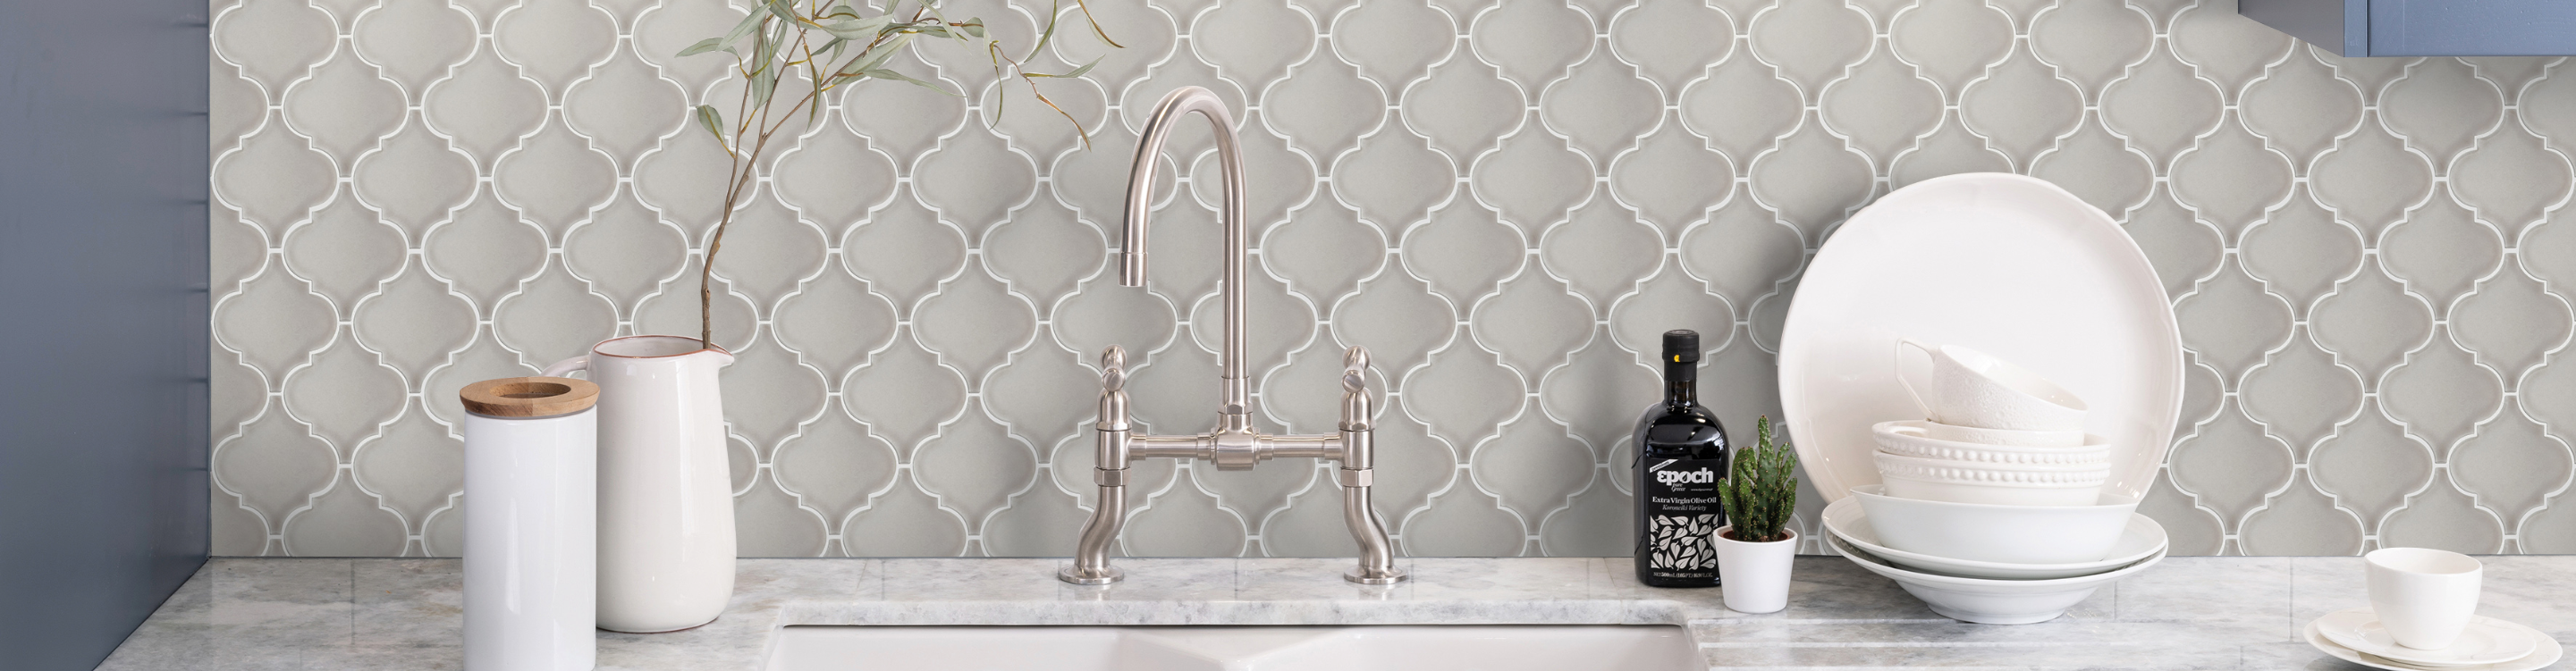 grey tile backsplash geometric shape tile, moroccan tile in kitchen with white ceramic apron sink and blue cabinets